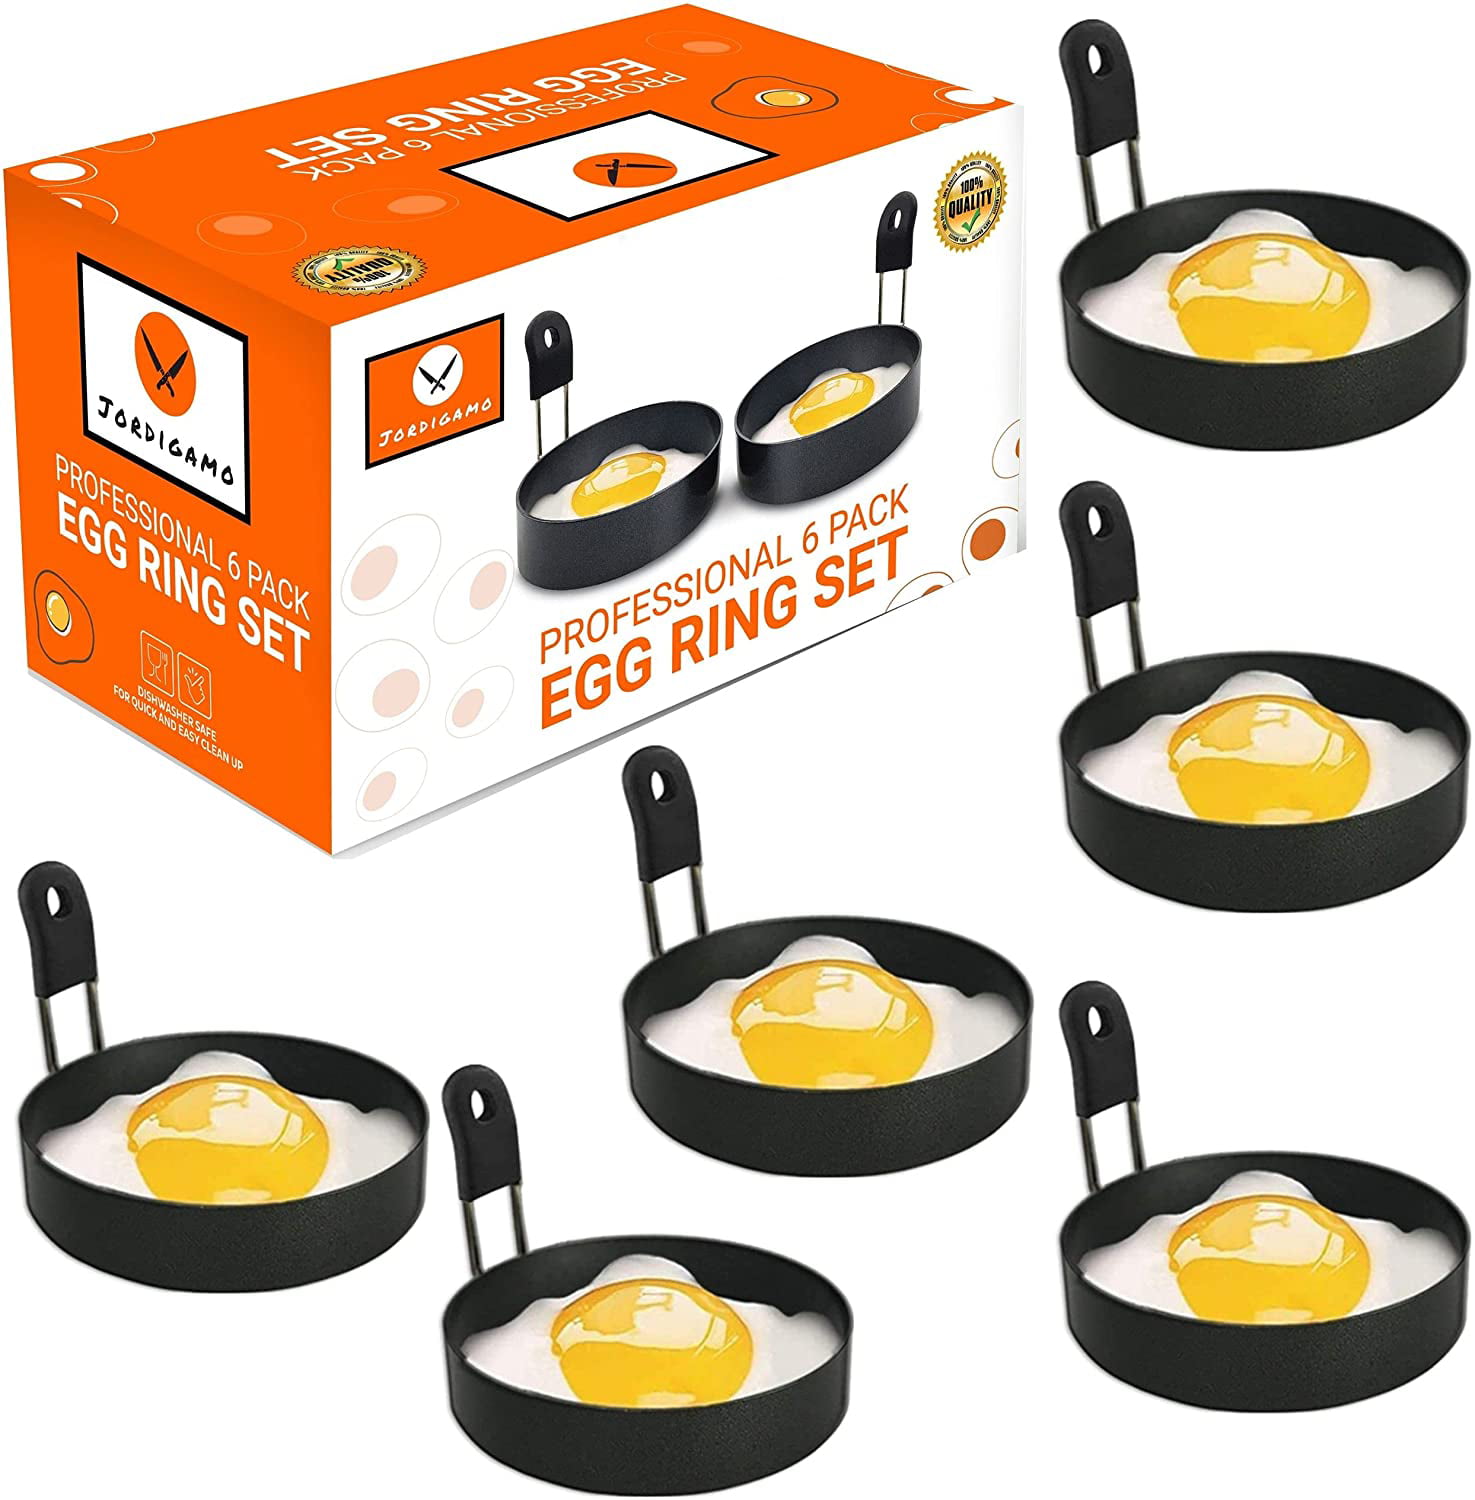 6 Pack Egg Ring Stainless Steel Round Egg Cooking Rings Non-Stick Frying Egg Maker Molds 